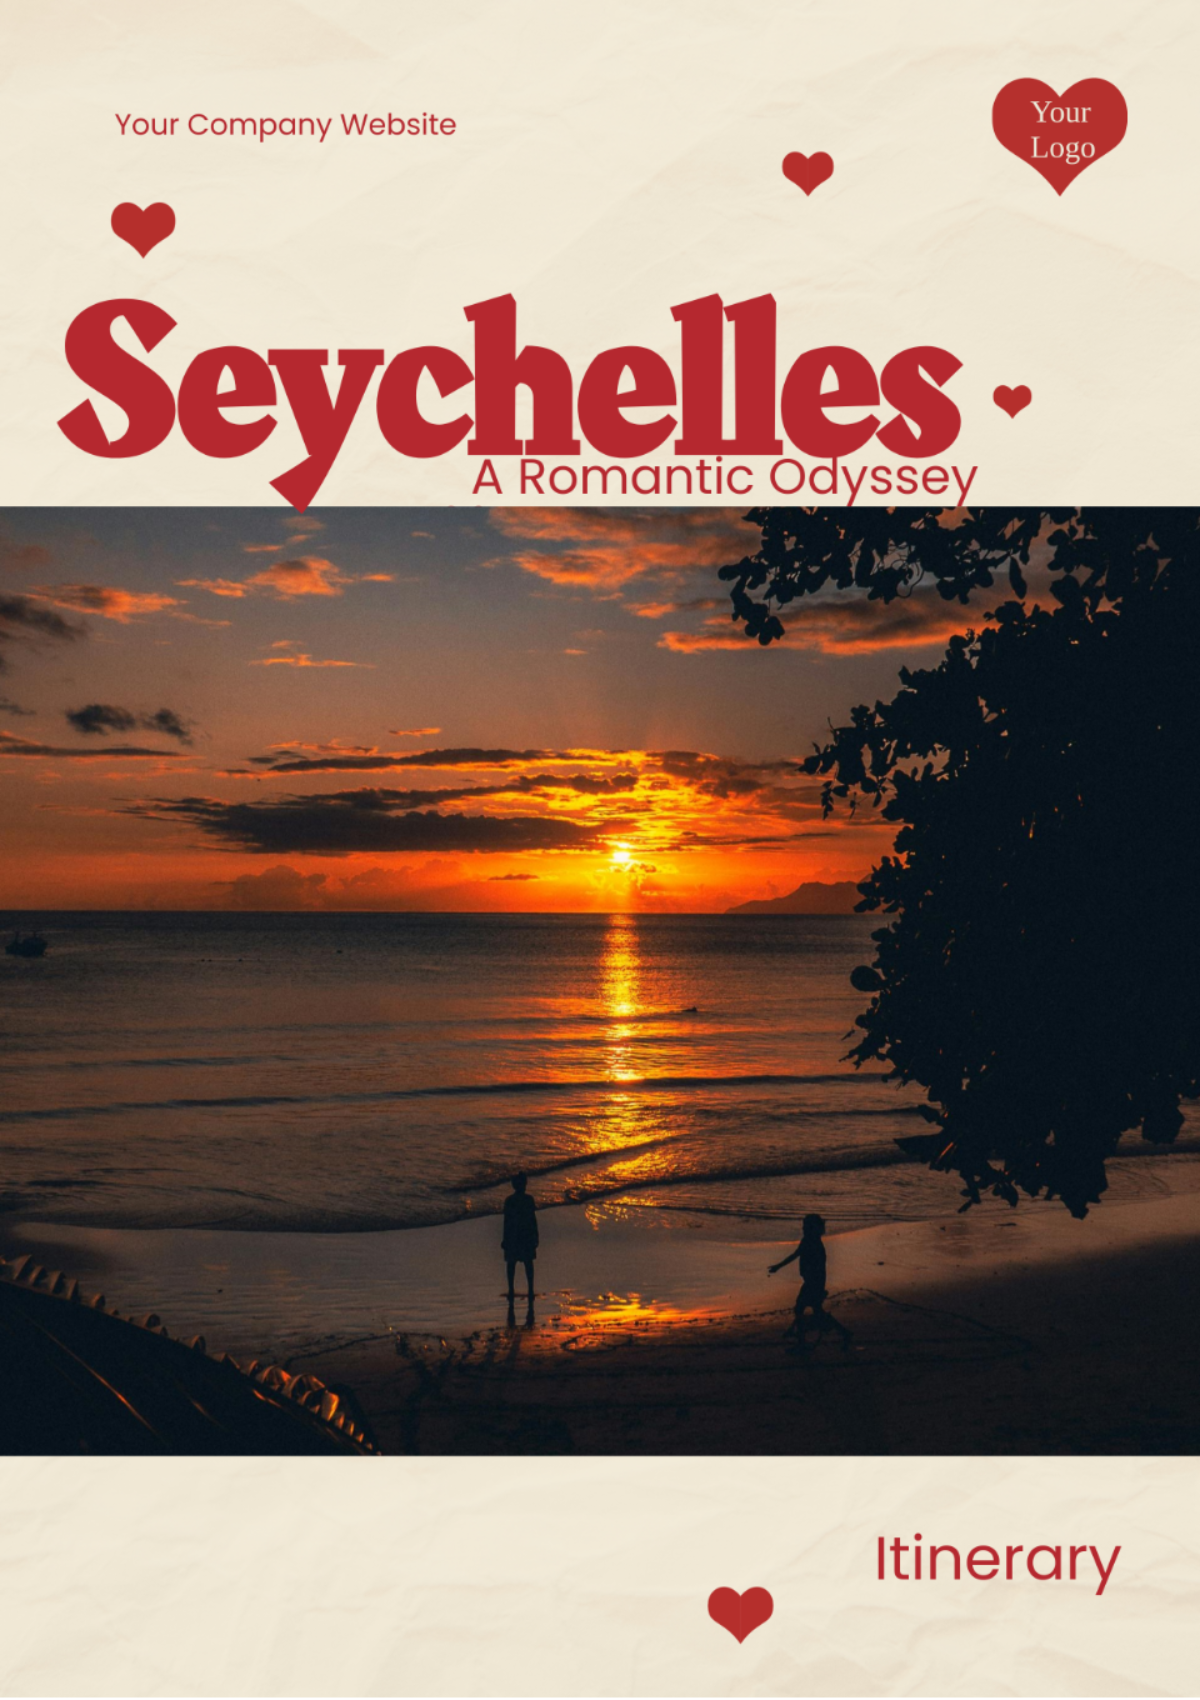 Seychelles Honeymoon Itinerary Template